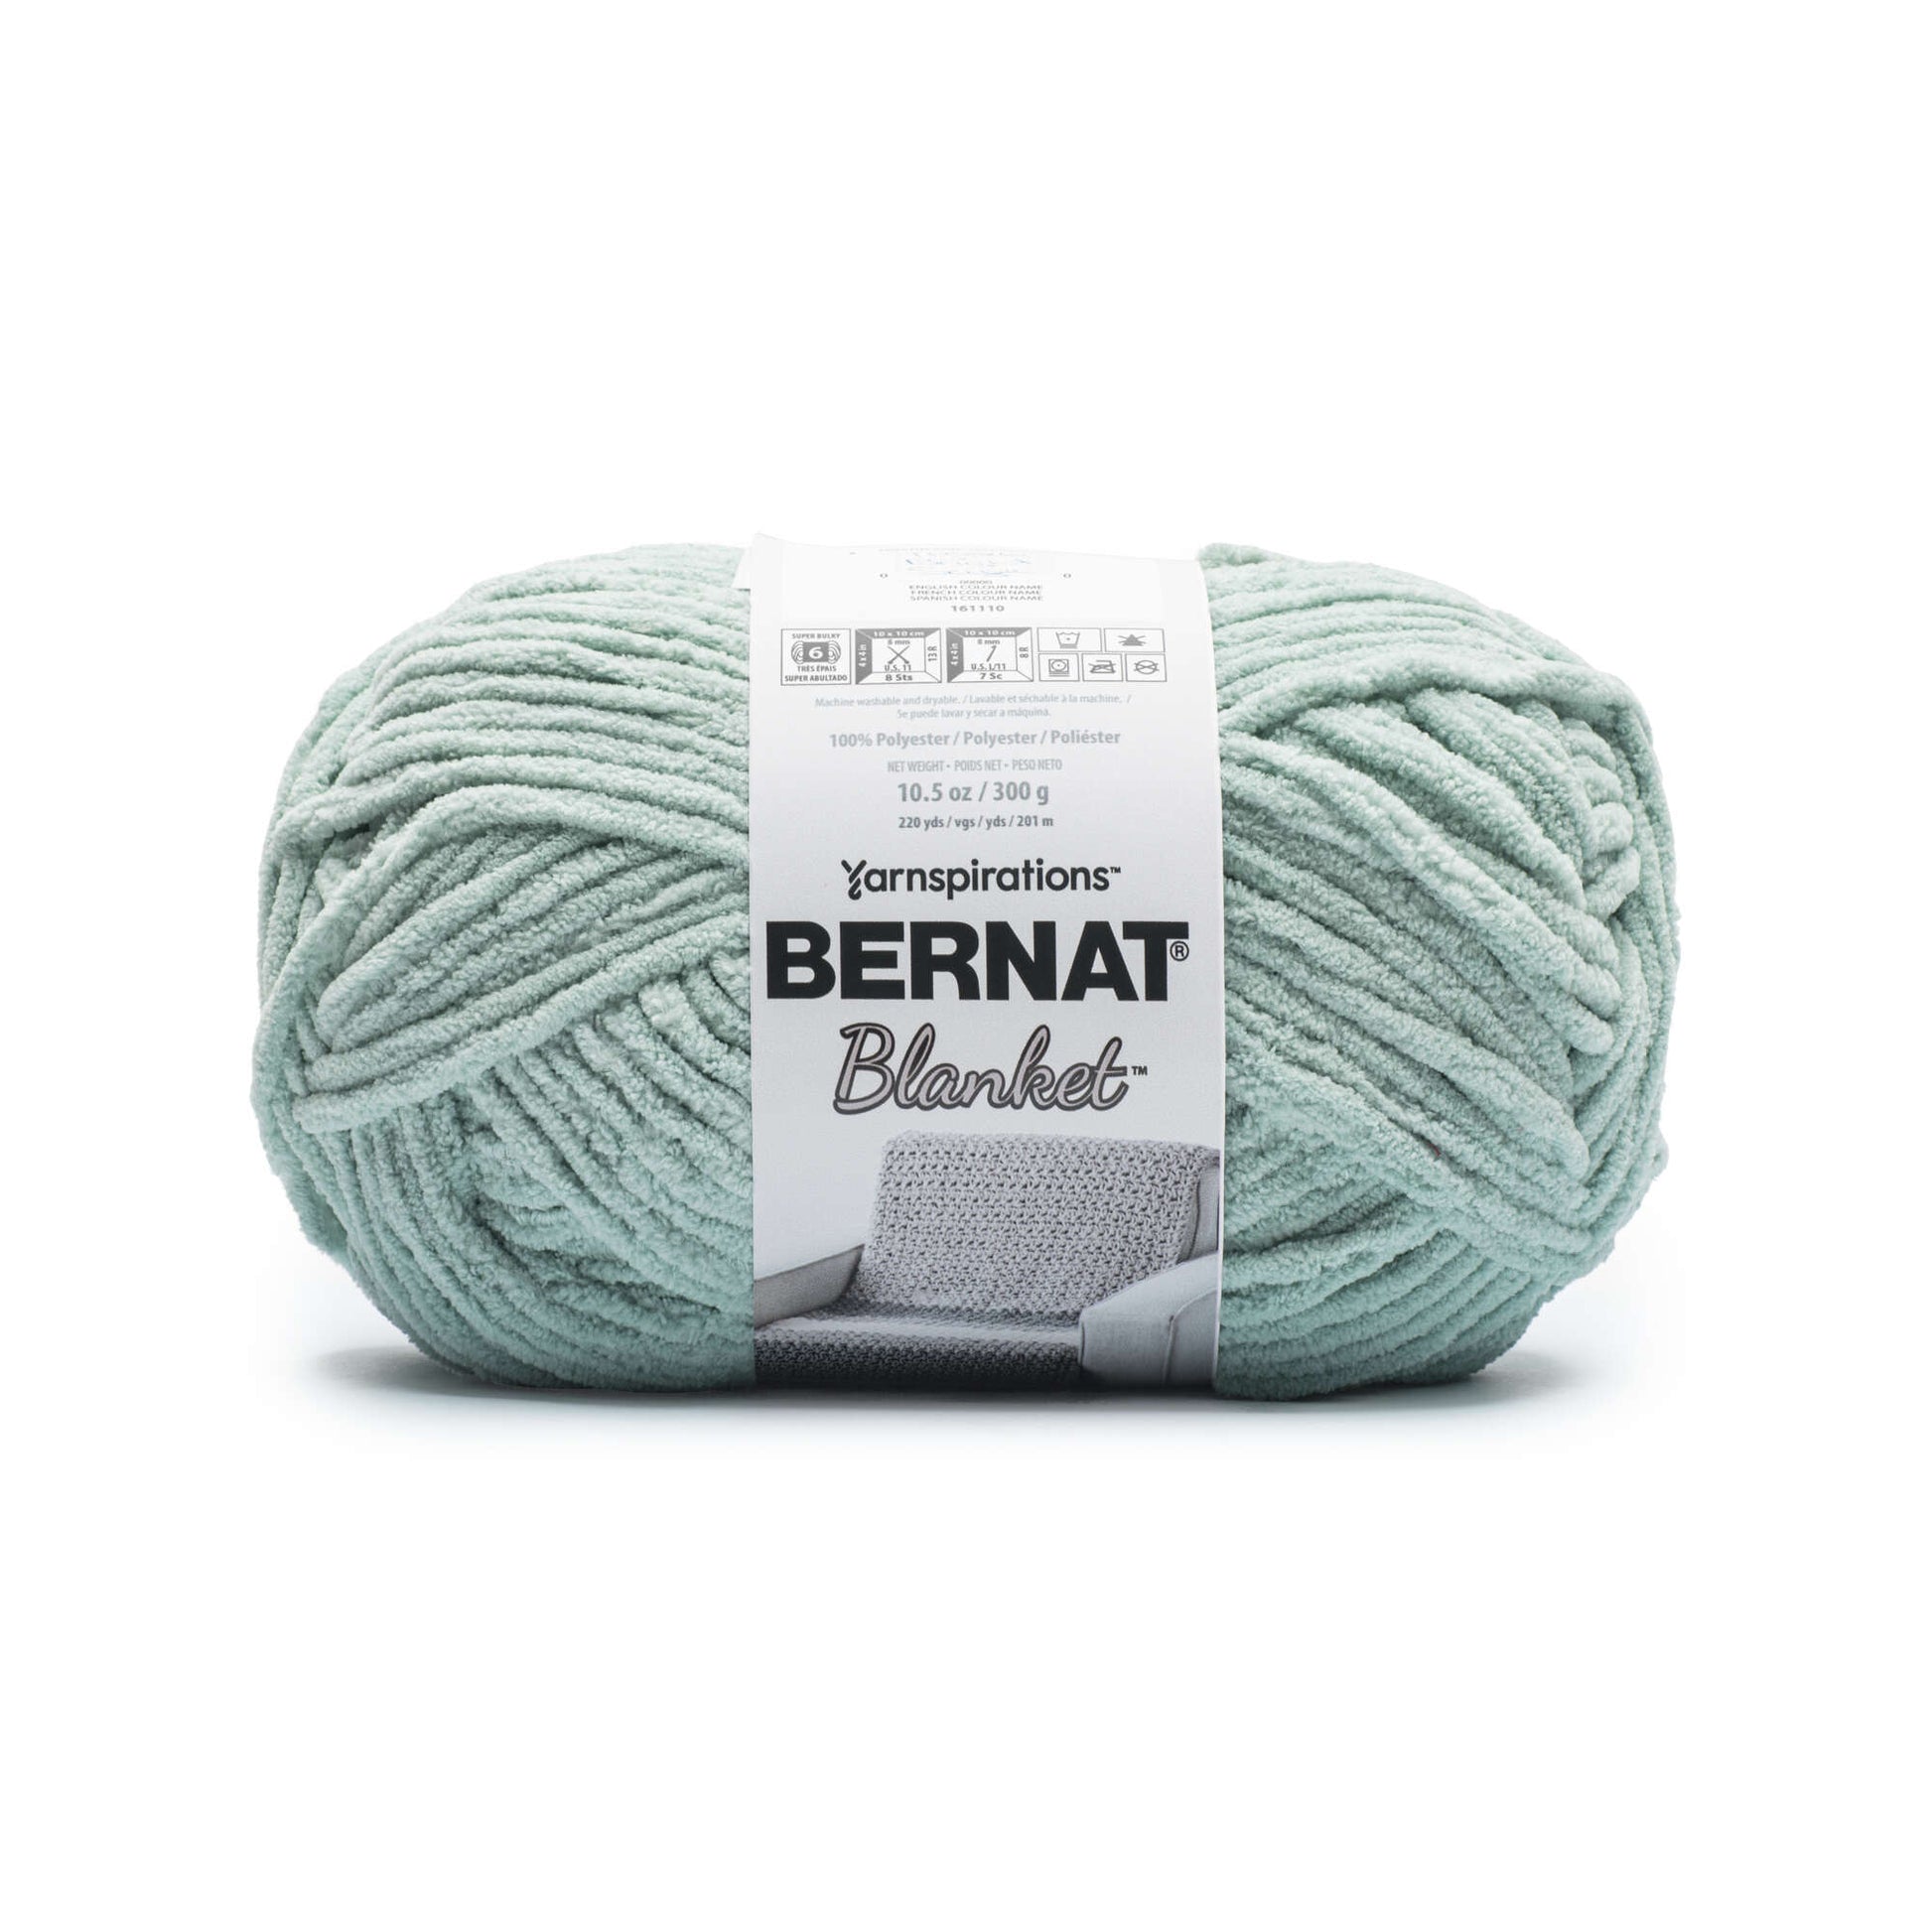 Bernat Blanket Yarn 300g 